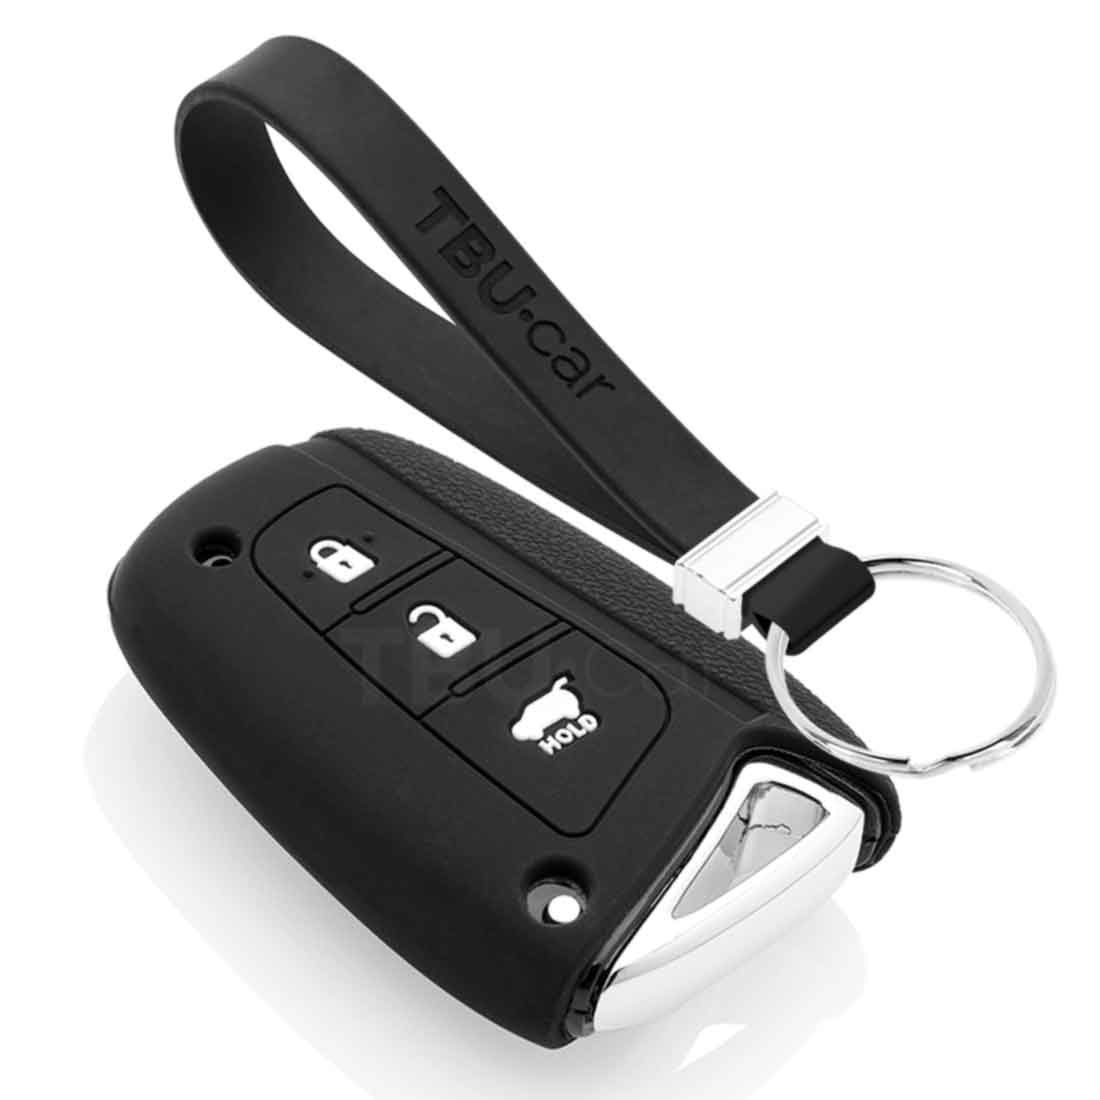 TBU car TBU car Car key cover compatible with Hyundai - Silicone Protective Remote Key Shell - FOB Case Cover - Black